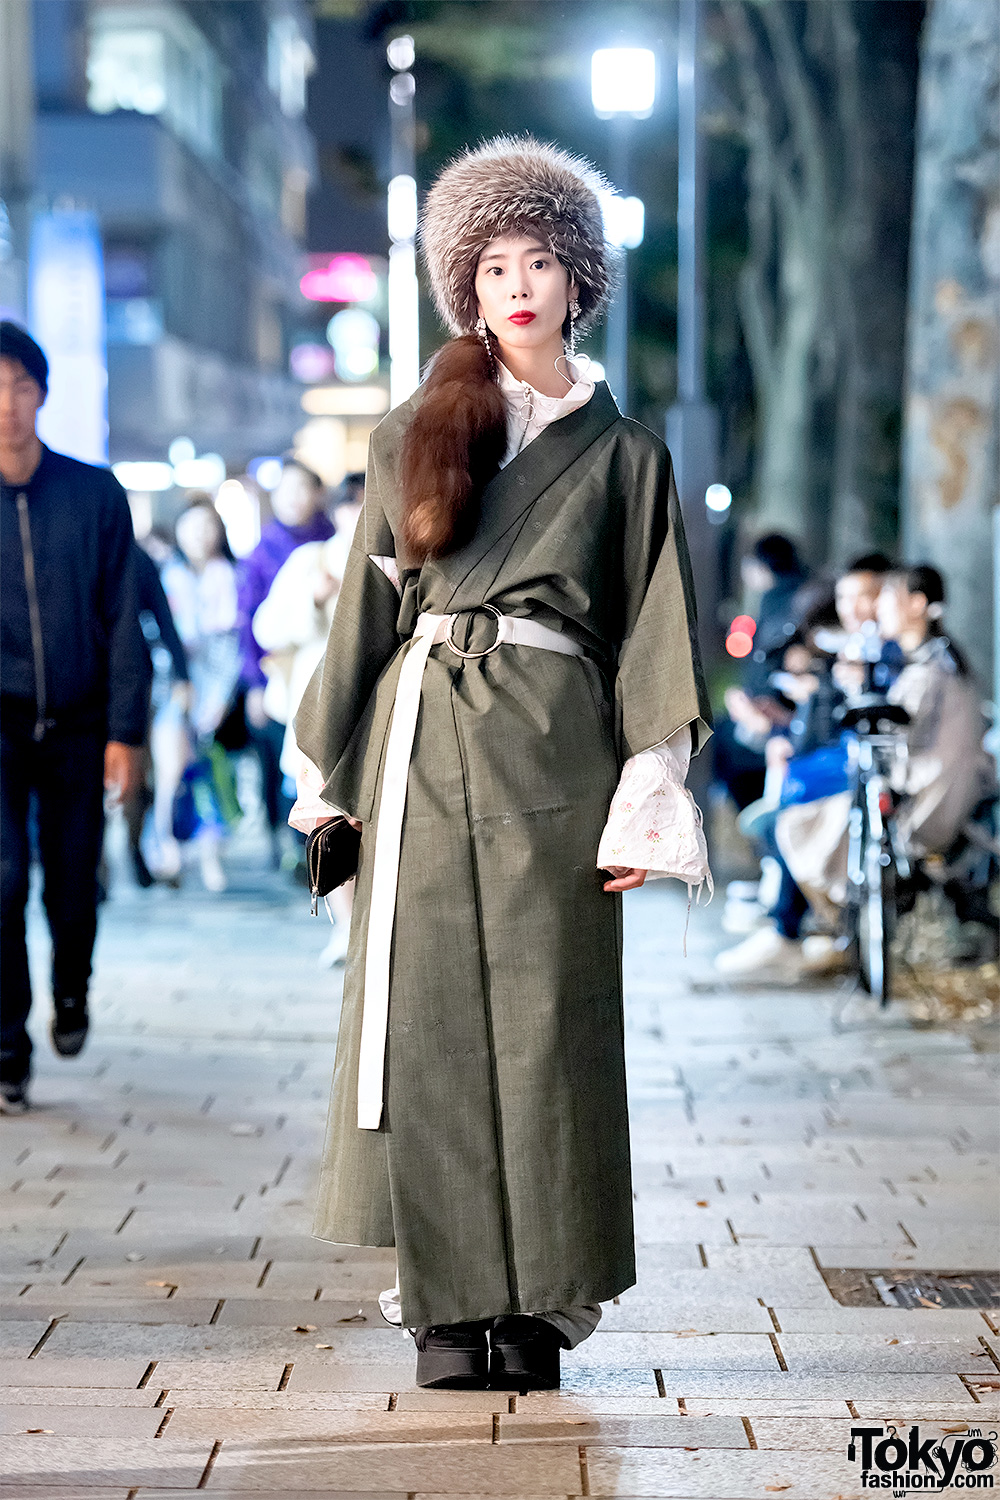 Japanese Kimono Coat, Little Sunny Bite, Kappa & Platform Sandals in Harajuku